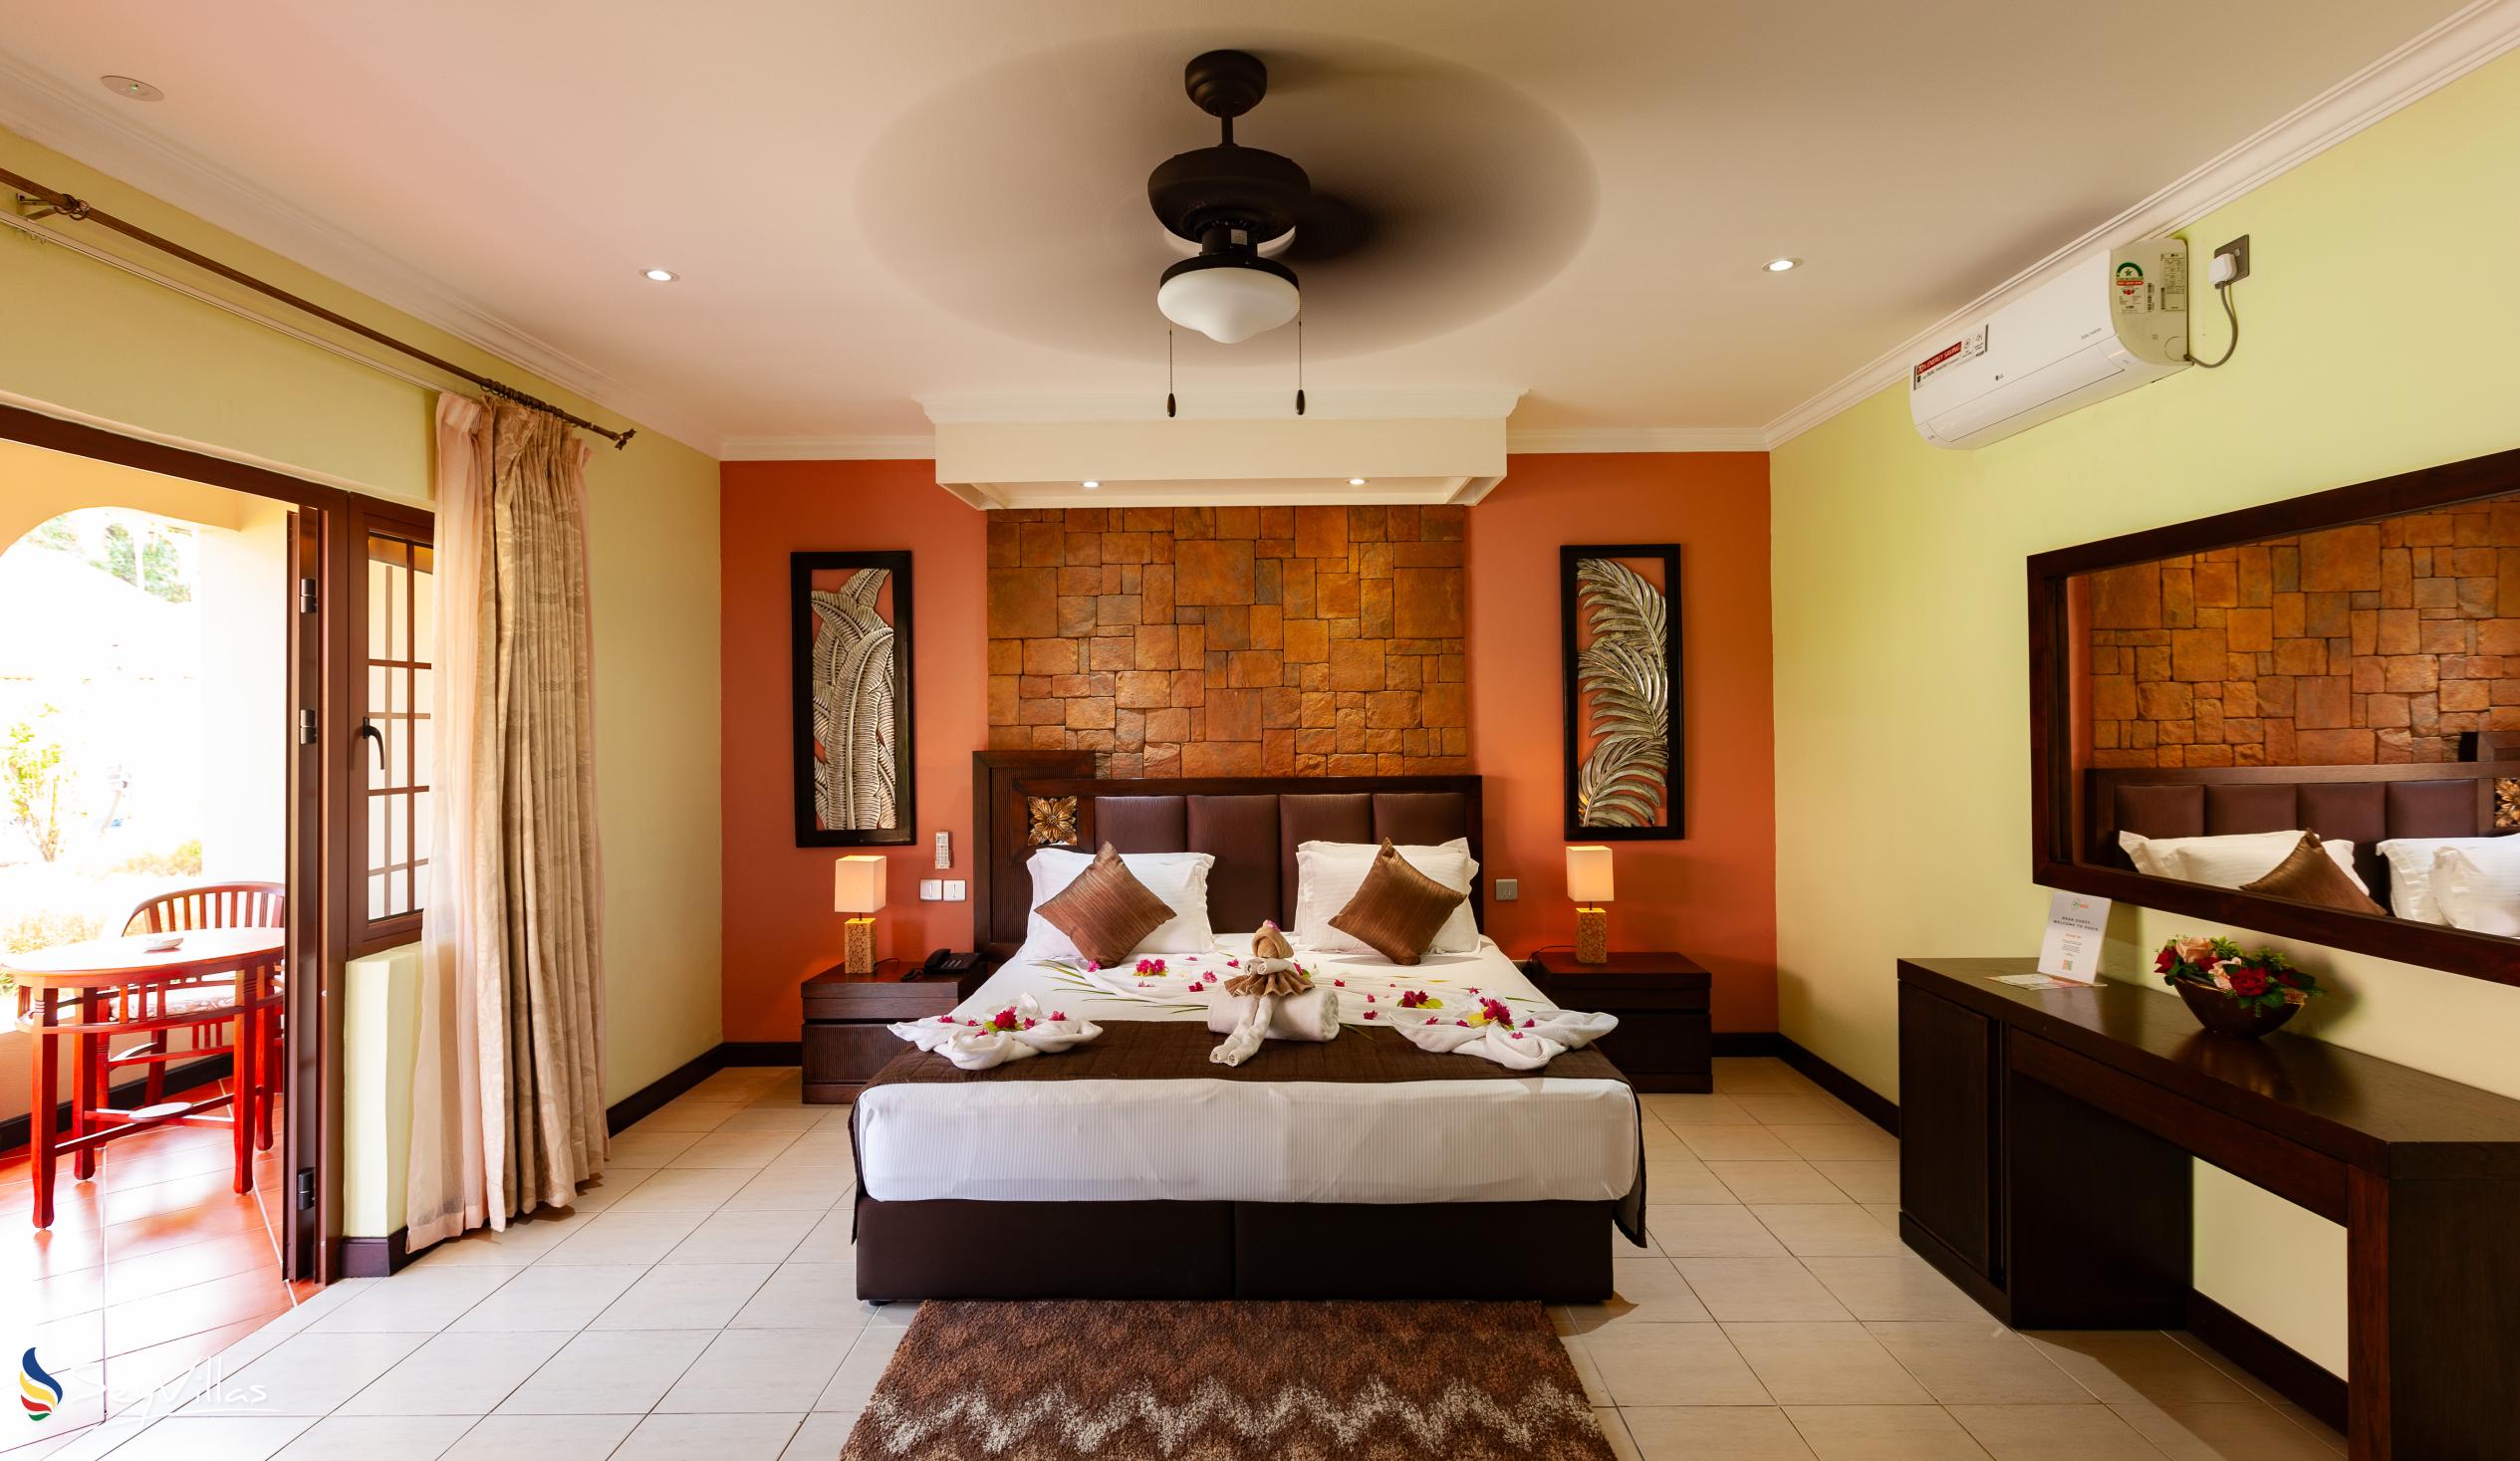 Photo 50: Oasis Hotel, Restaurant & Spa - Superior Room - Praslin (Seychelles)